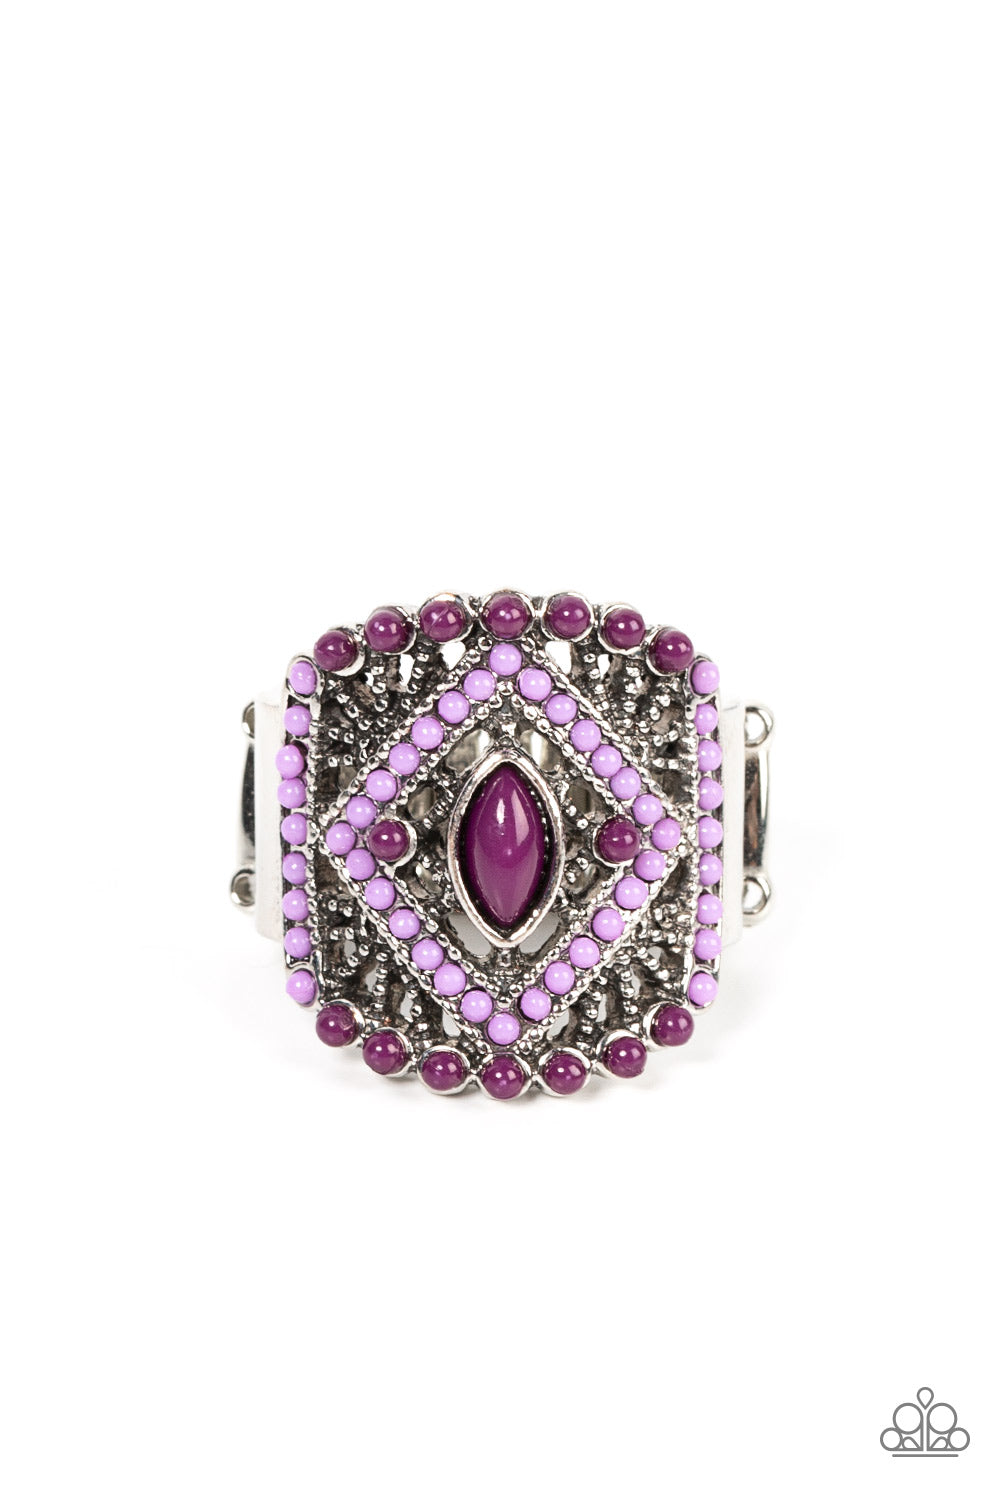 Amplified Aztec Ring Paparazzi $5 Jewelry. Purple Seed Beads Ring.  #P4WH-PRXX-194XX.